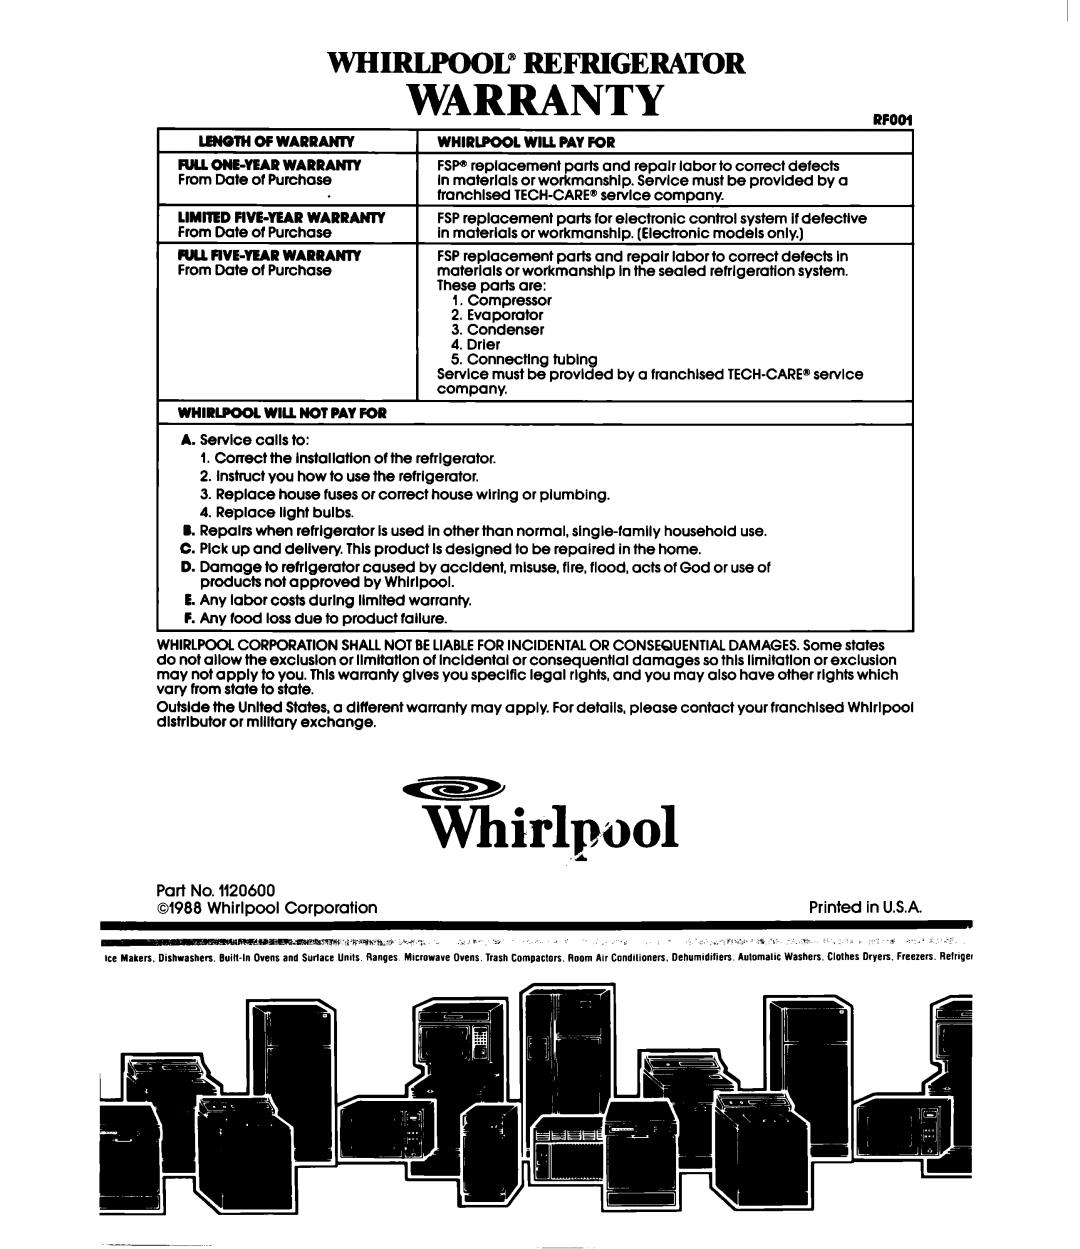 Whirlpool ETl4JM manual WHIRLPOOI.i= REF’RIGERATOR, Warranty 